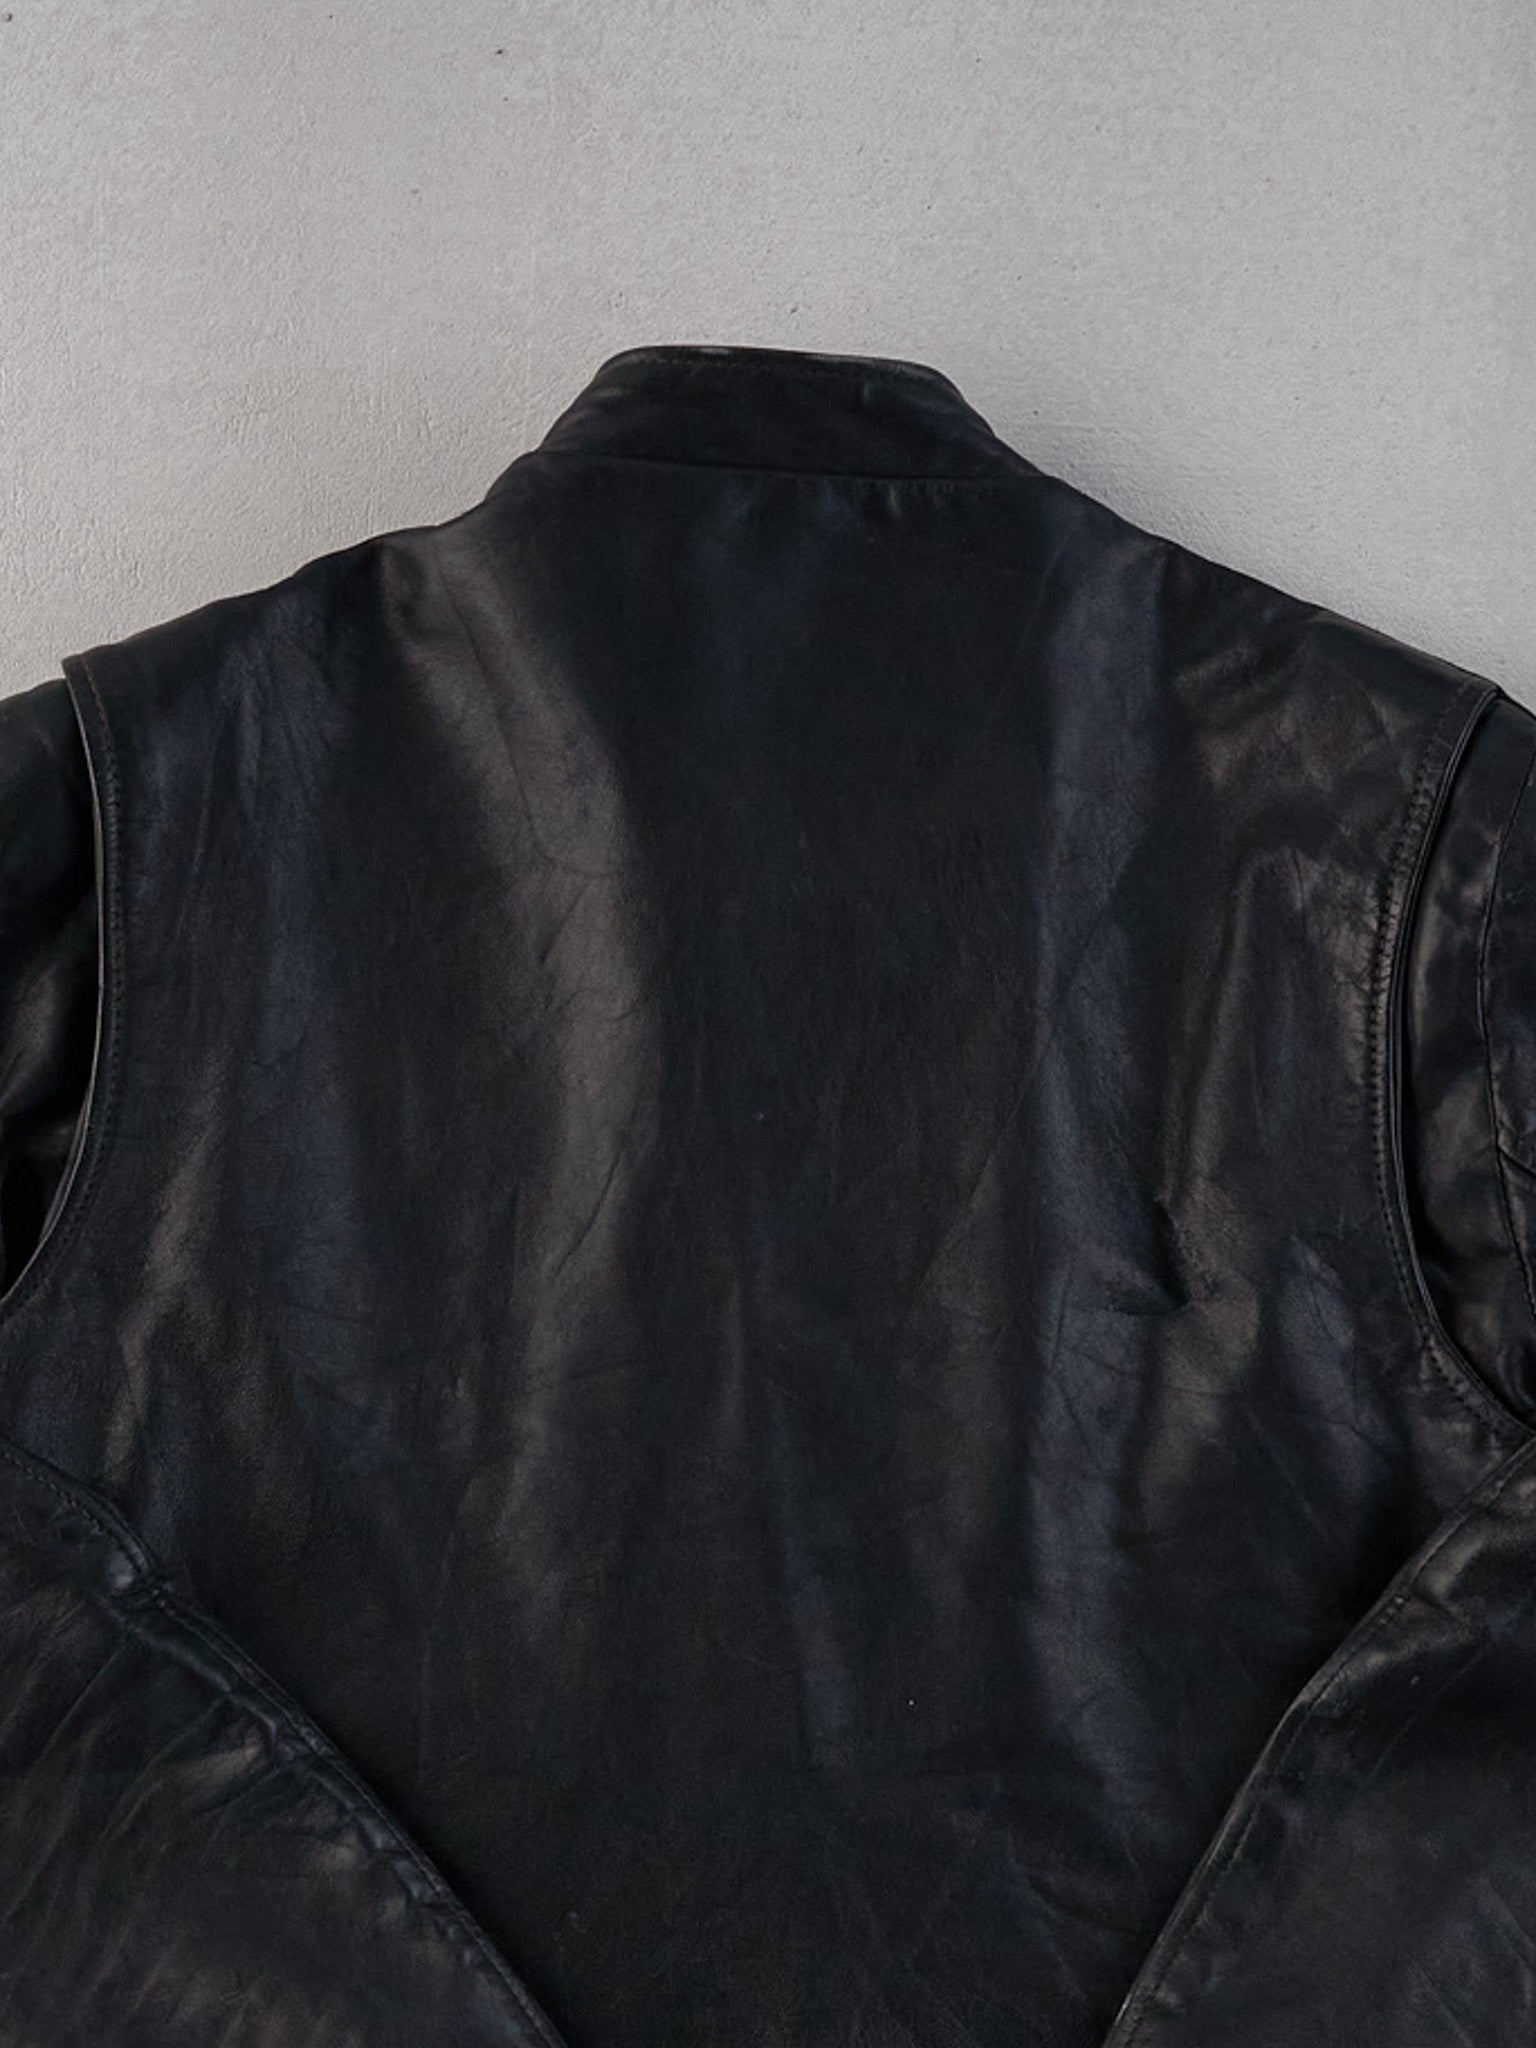 Vintage 70s Black Brimaco Collared Leather Jacket (M)